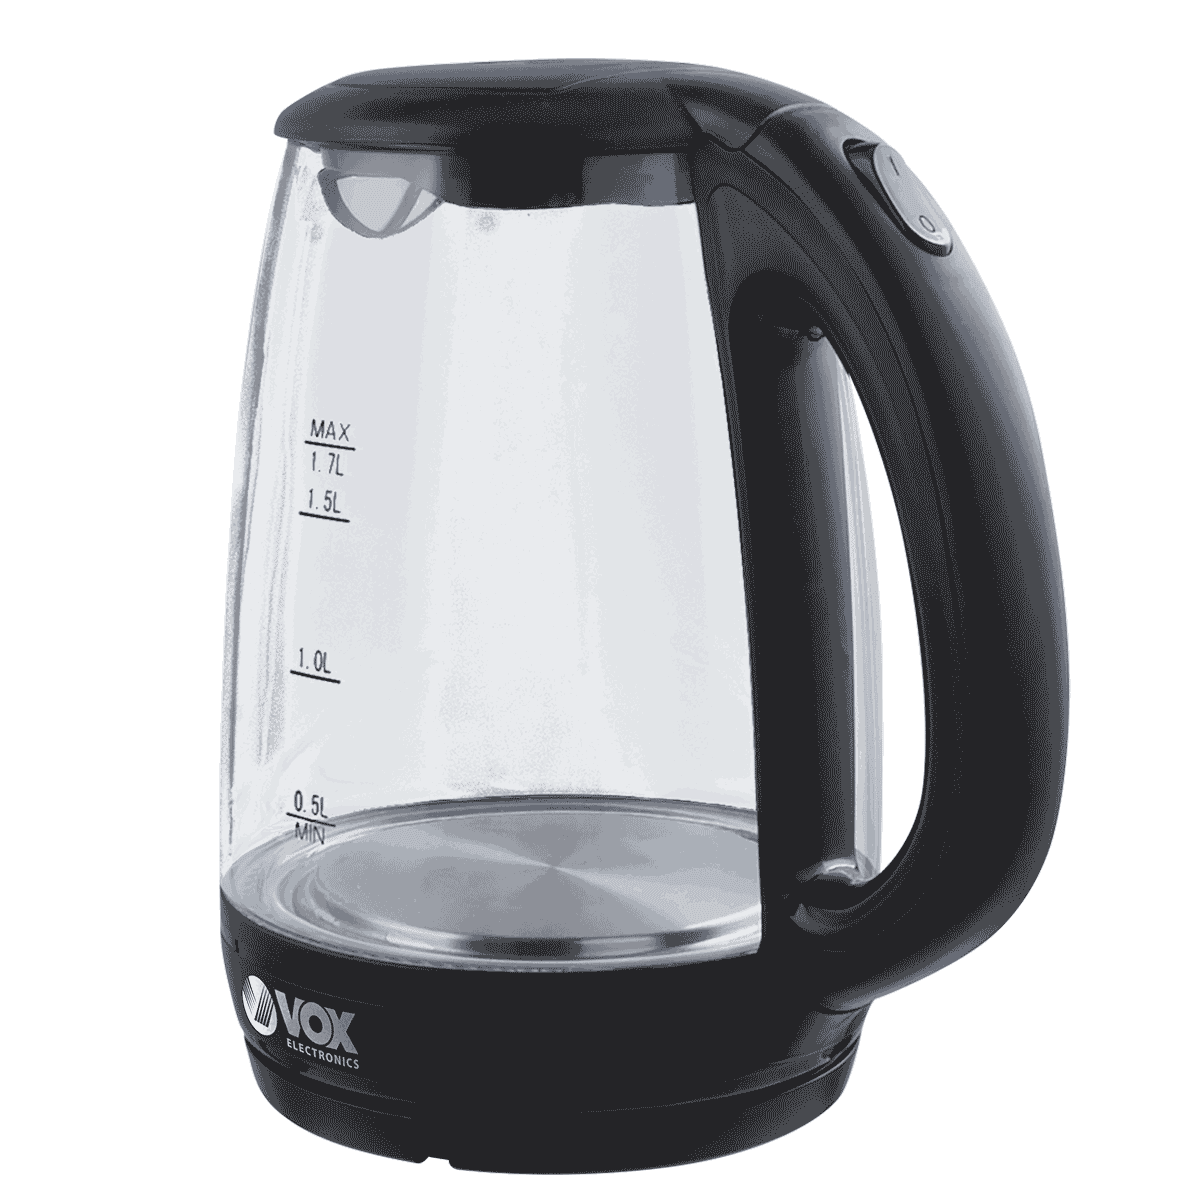 VOX Бокал за вода WK 1704  2200w  1.7 litri